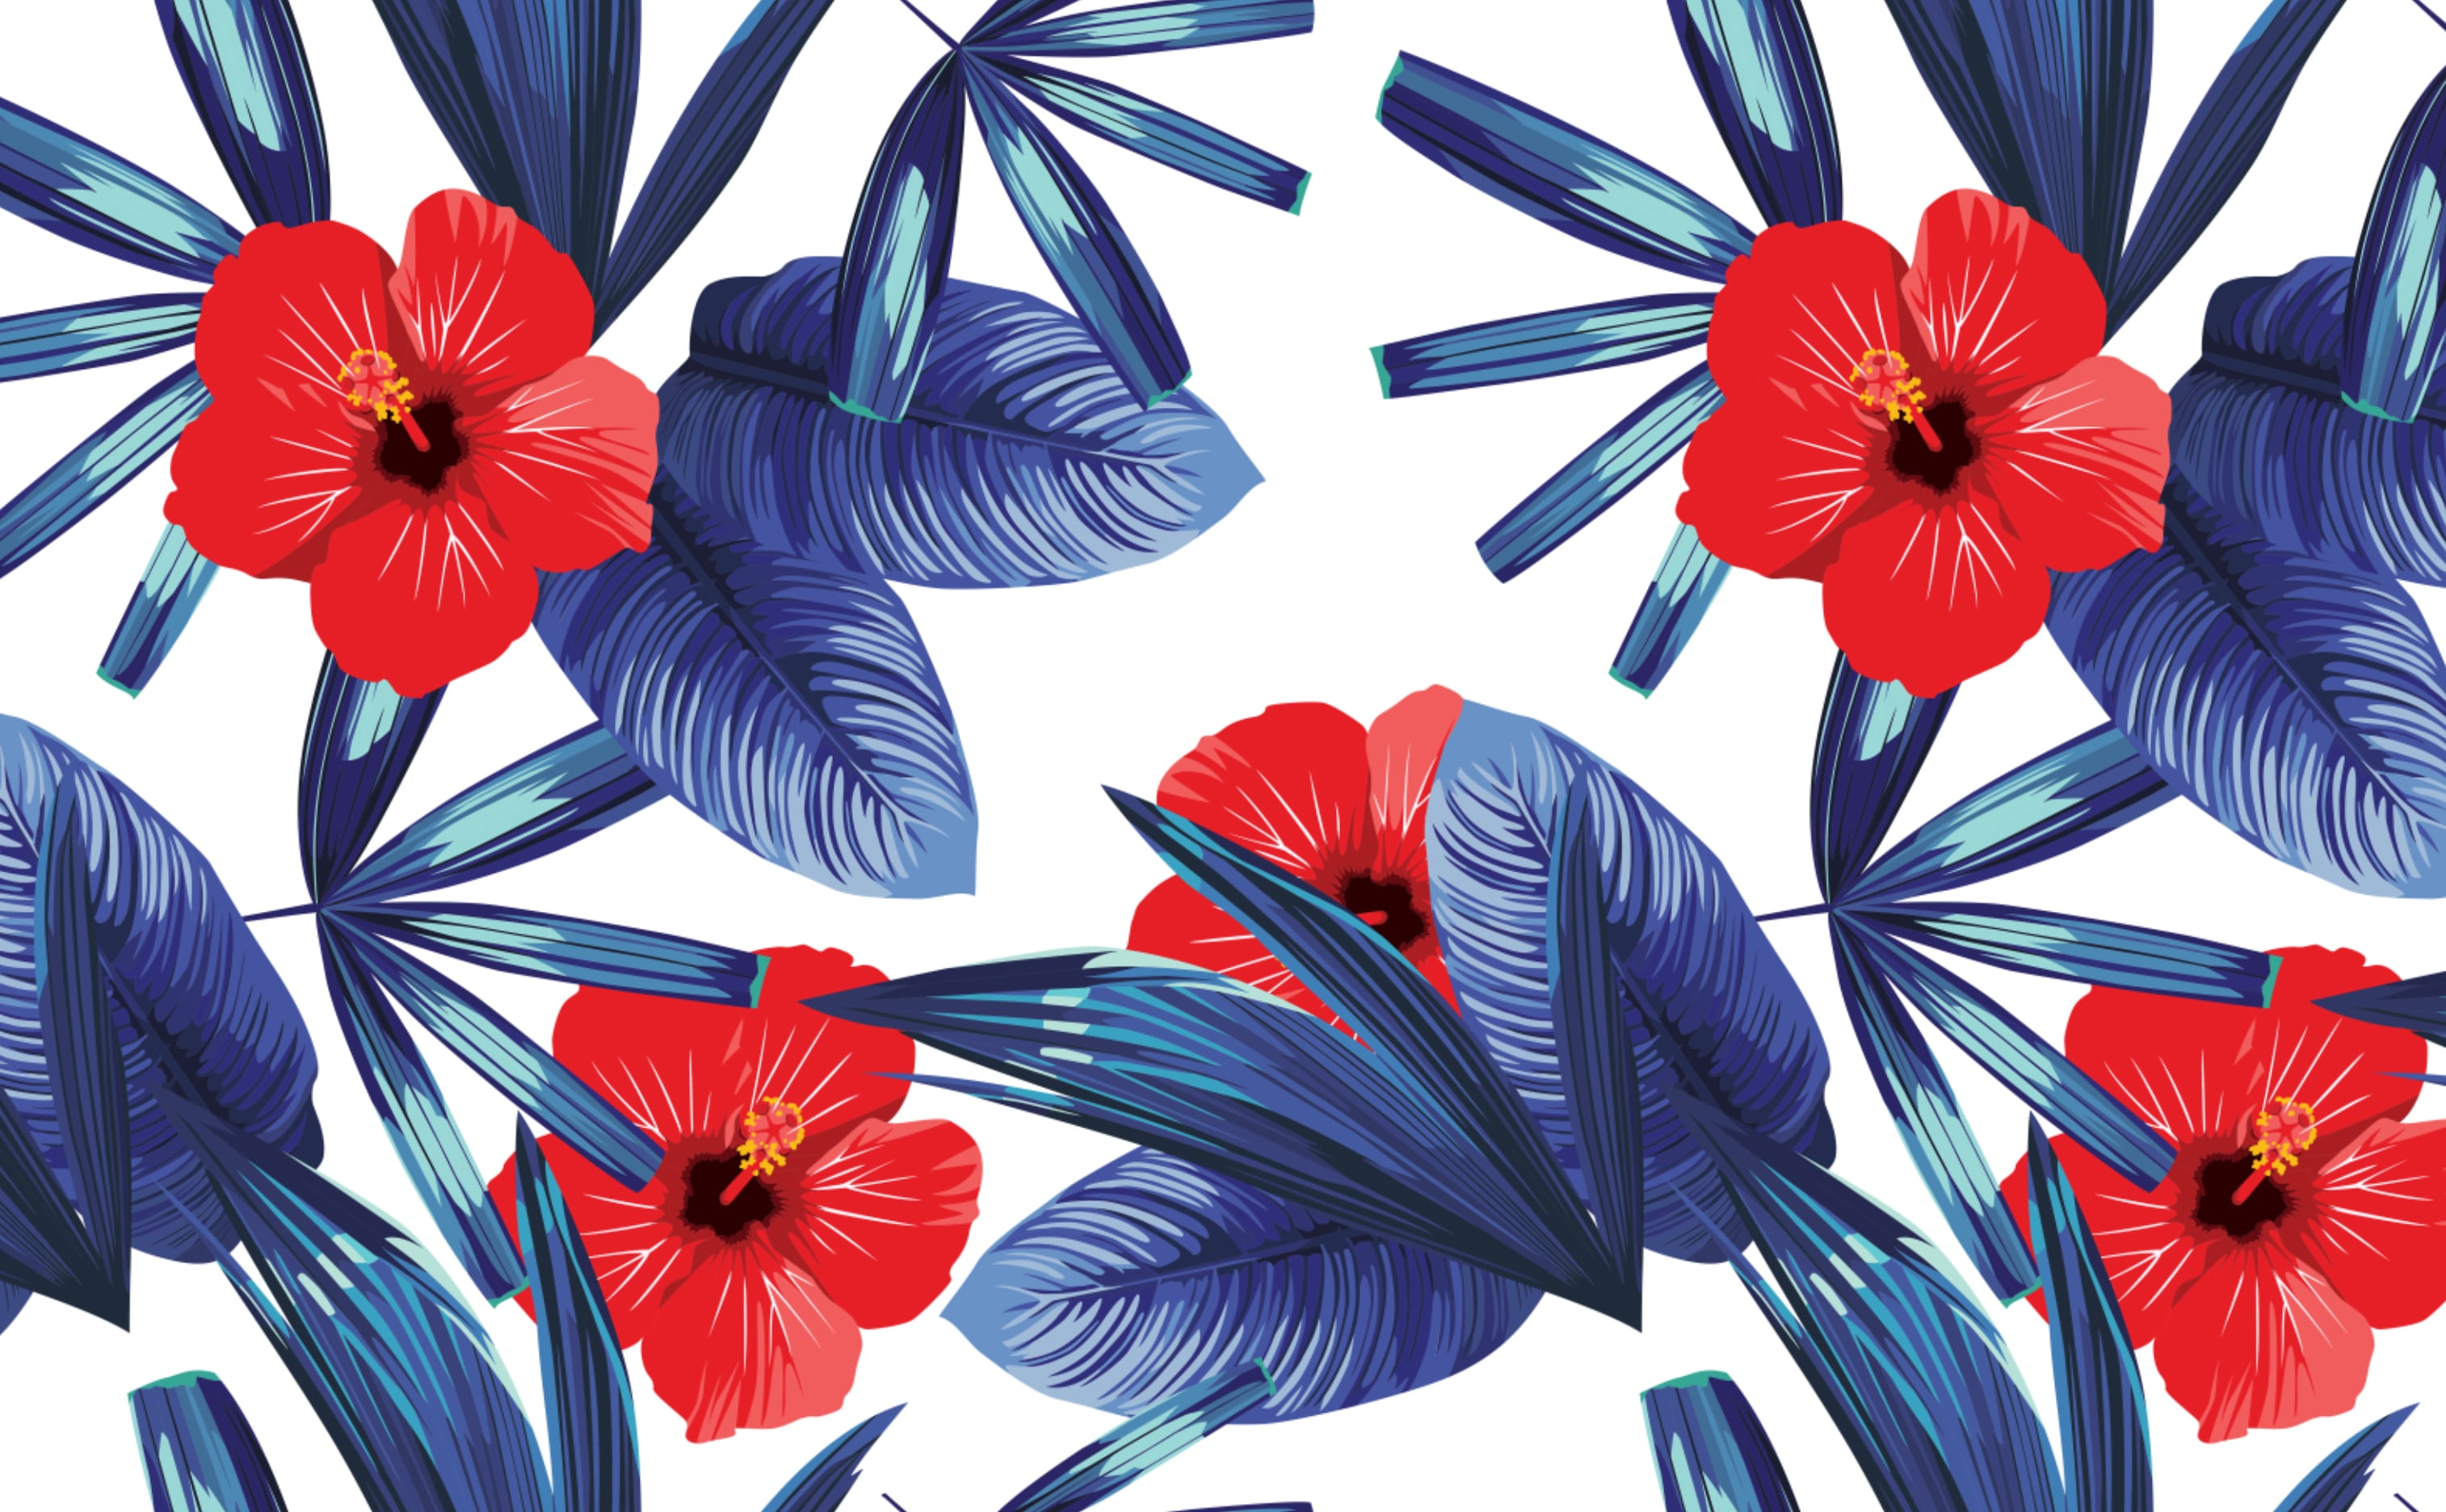 5400 Blue Hibiscus Flower Illustrations RoyaltyFree Vector Graphics   Clip Art  iStock